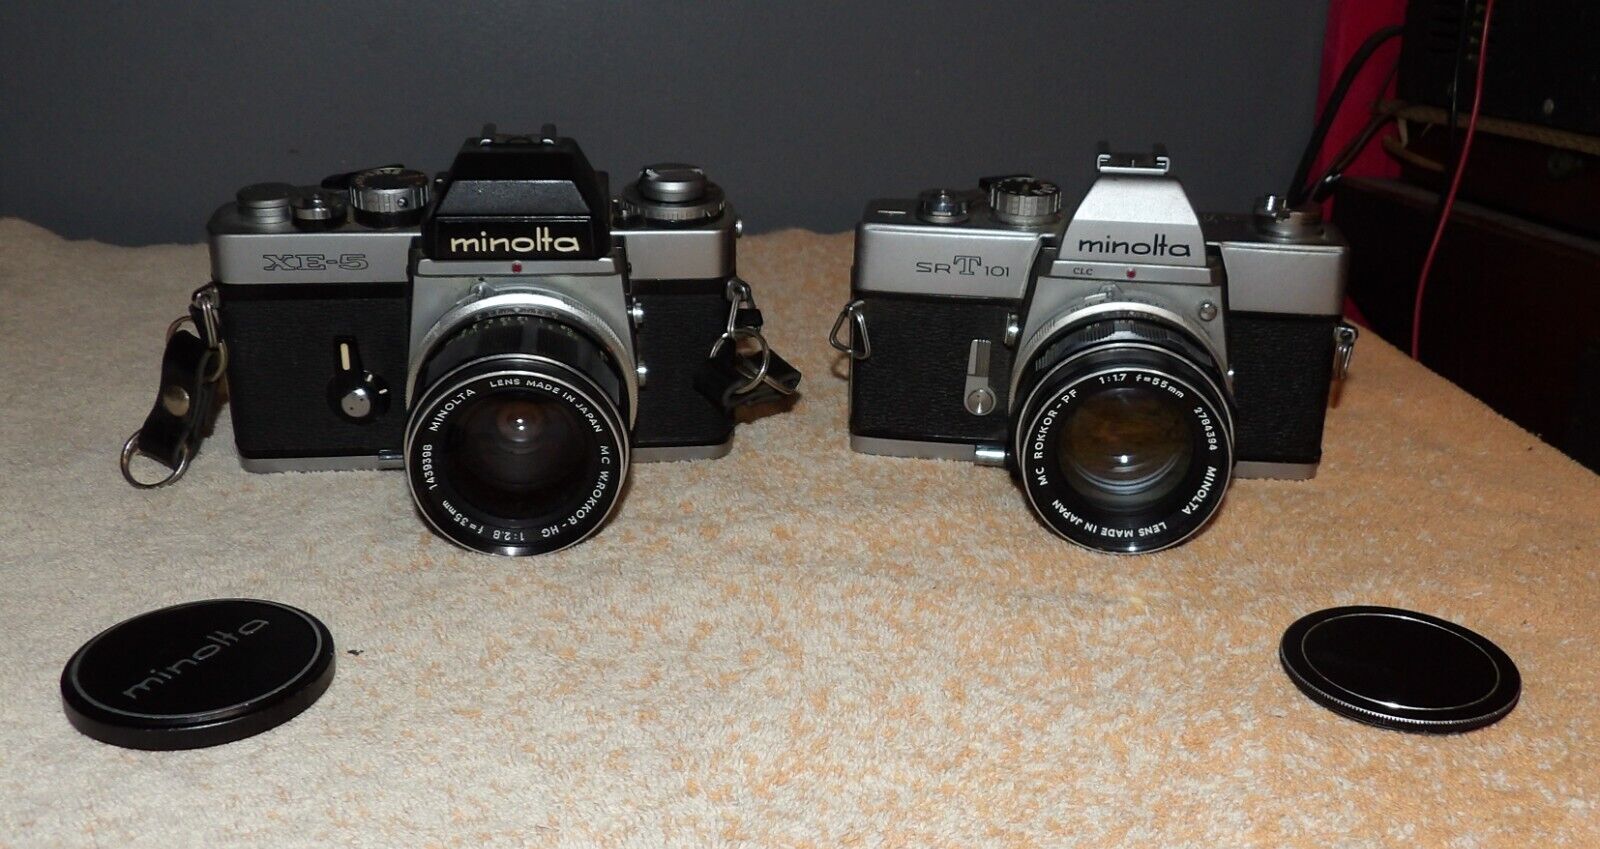 Minolta XE-5 35mm Camera w. Rokkor 2.8 35mm Lens & Minolta SRT101 35mm Camera